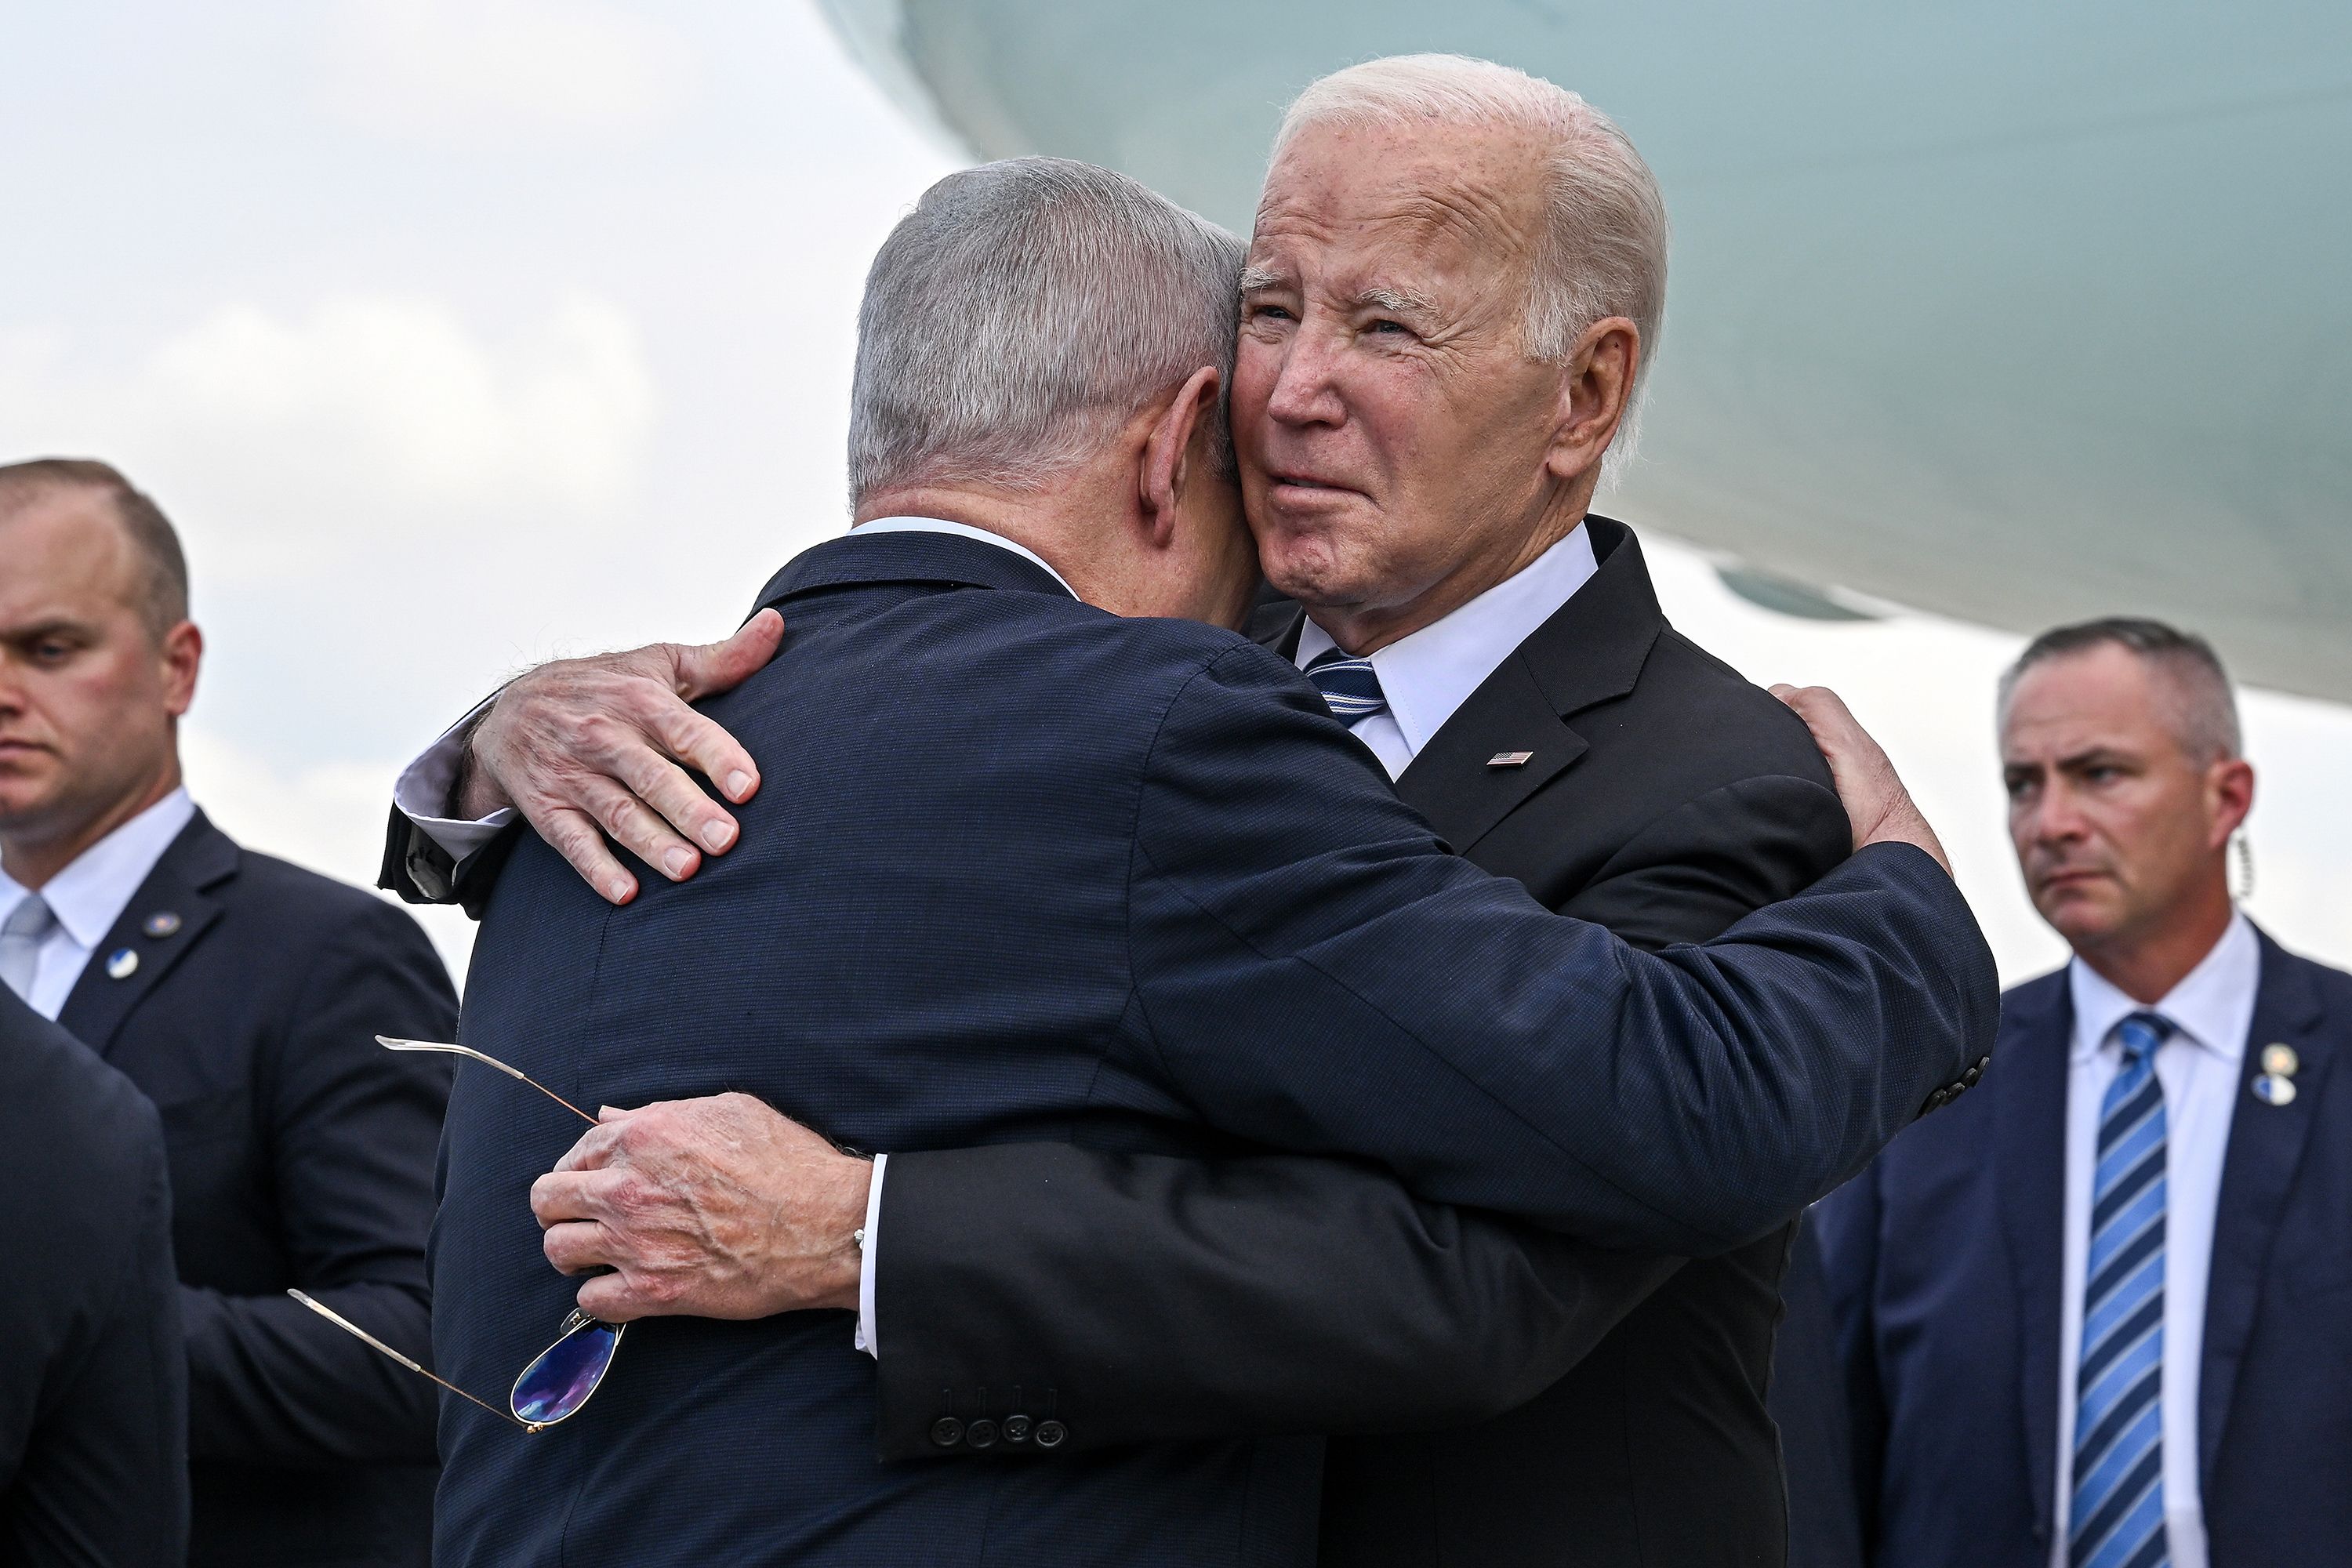 President Biden is greeted by Israeli Prime Minister Netanyahu after arriving at Ben Gurion International Airport in Tel Aviv on October 18.